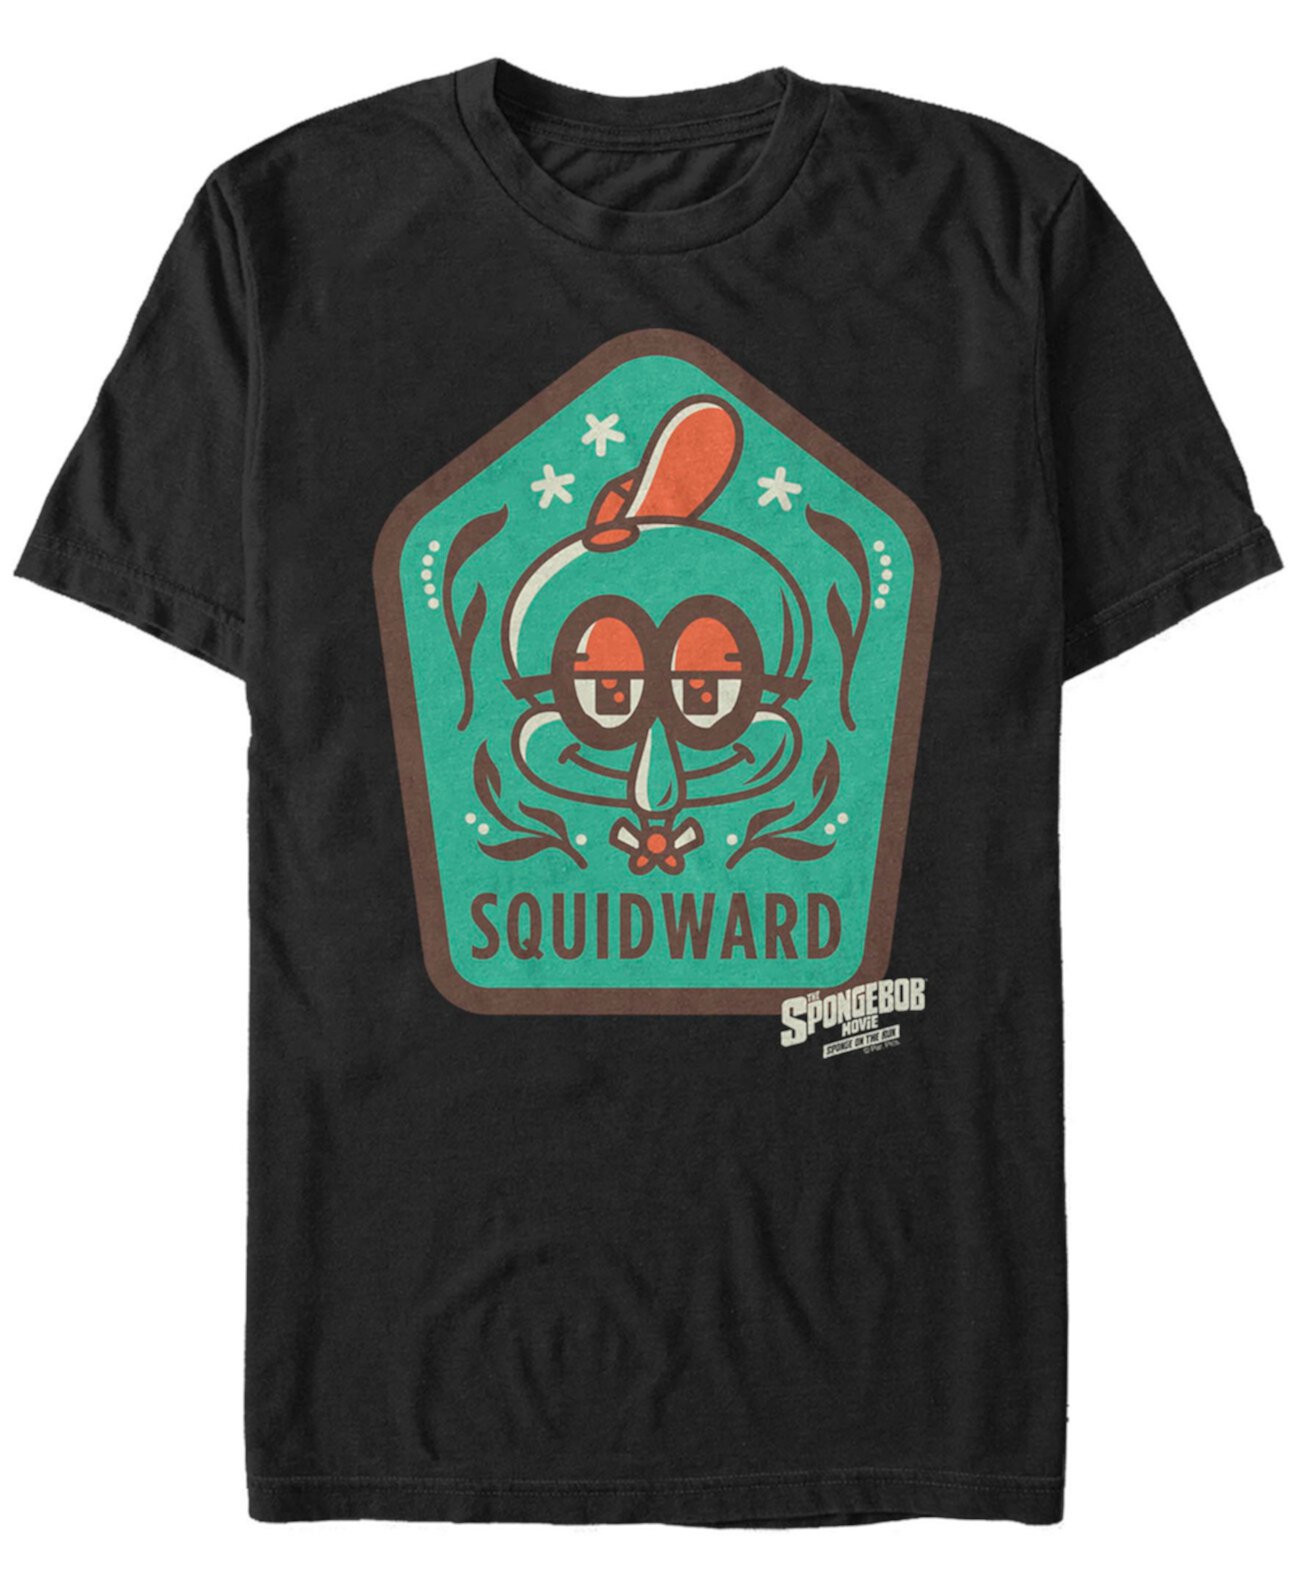 Мужская футболка с нашивкой Squidward Camp FIFTH SUN